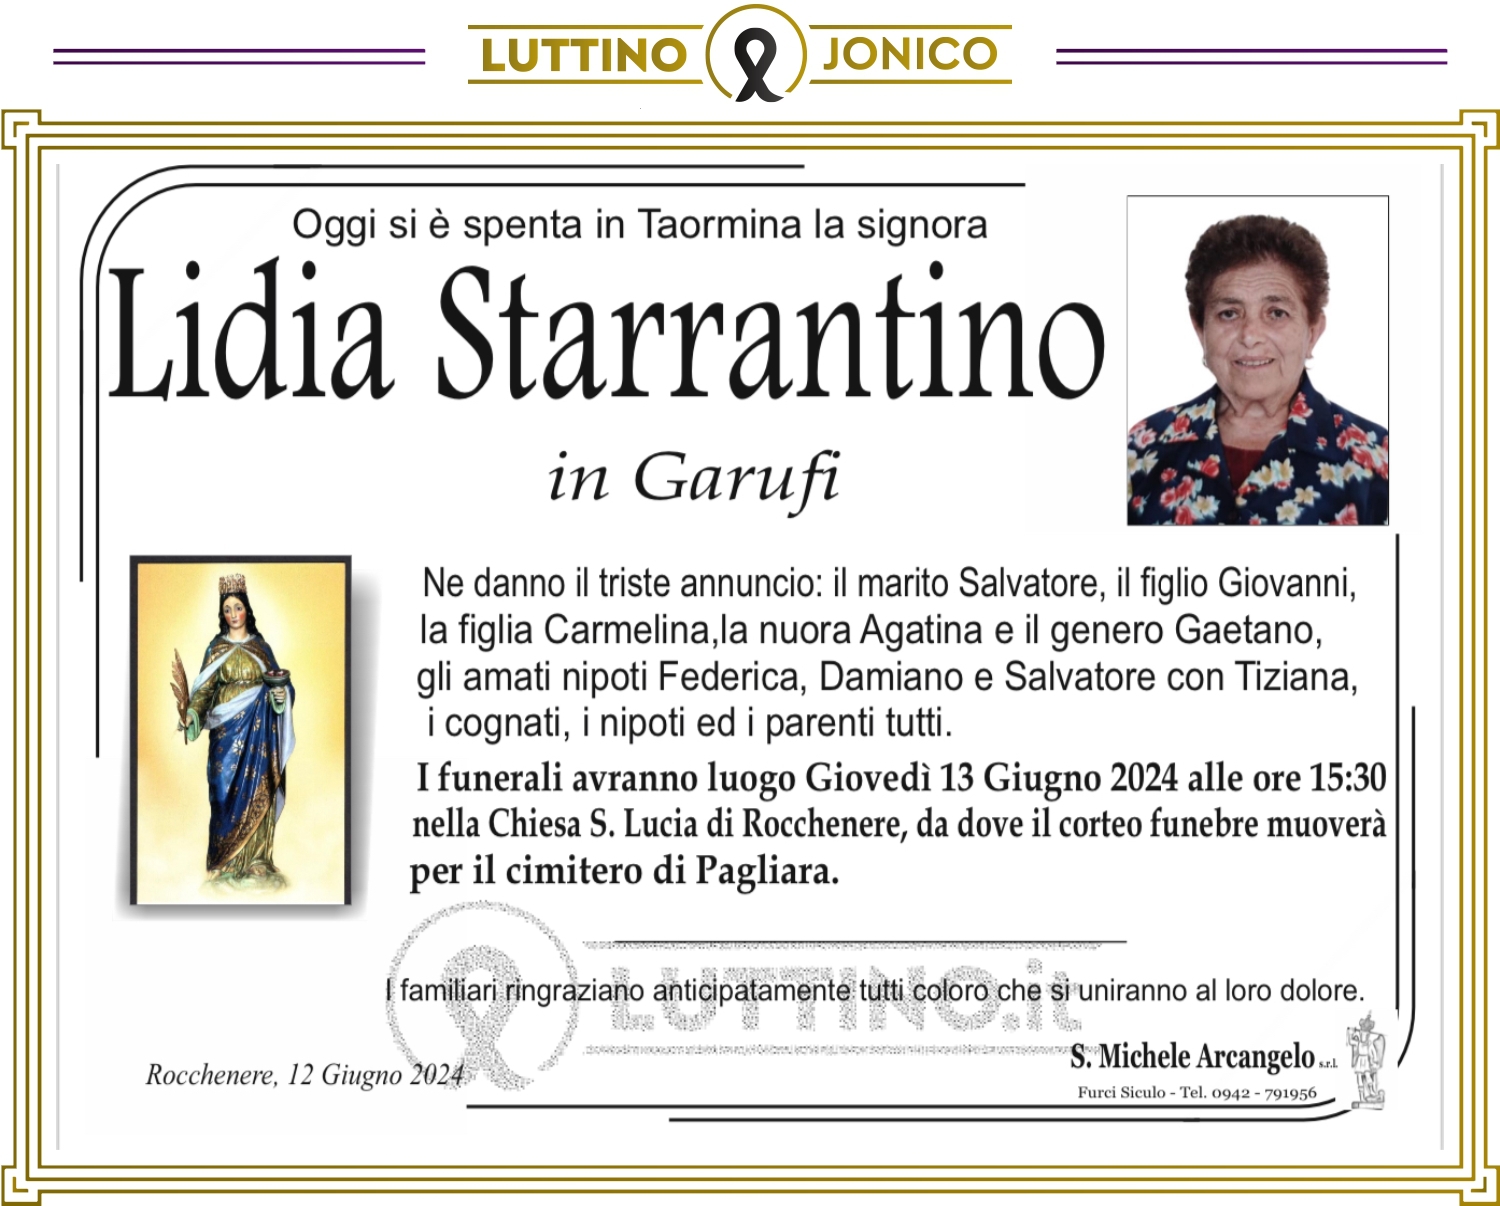 Lidia Starrantino